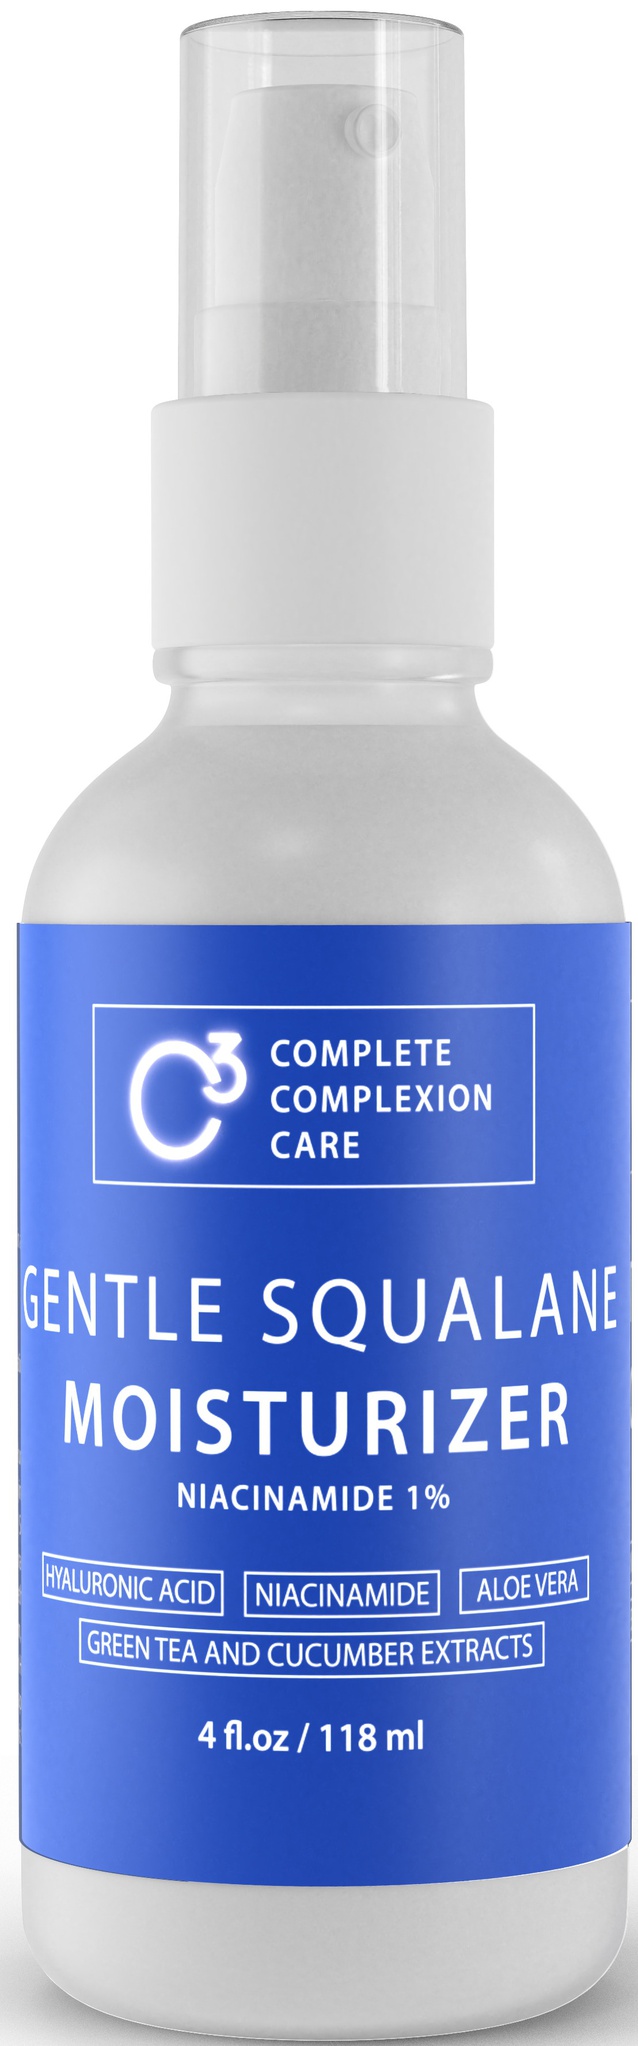 Complete Complexion Care Gentle Squalane Moisturizer